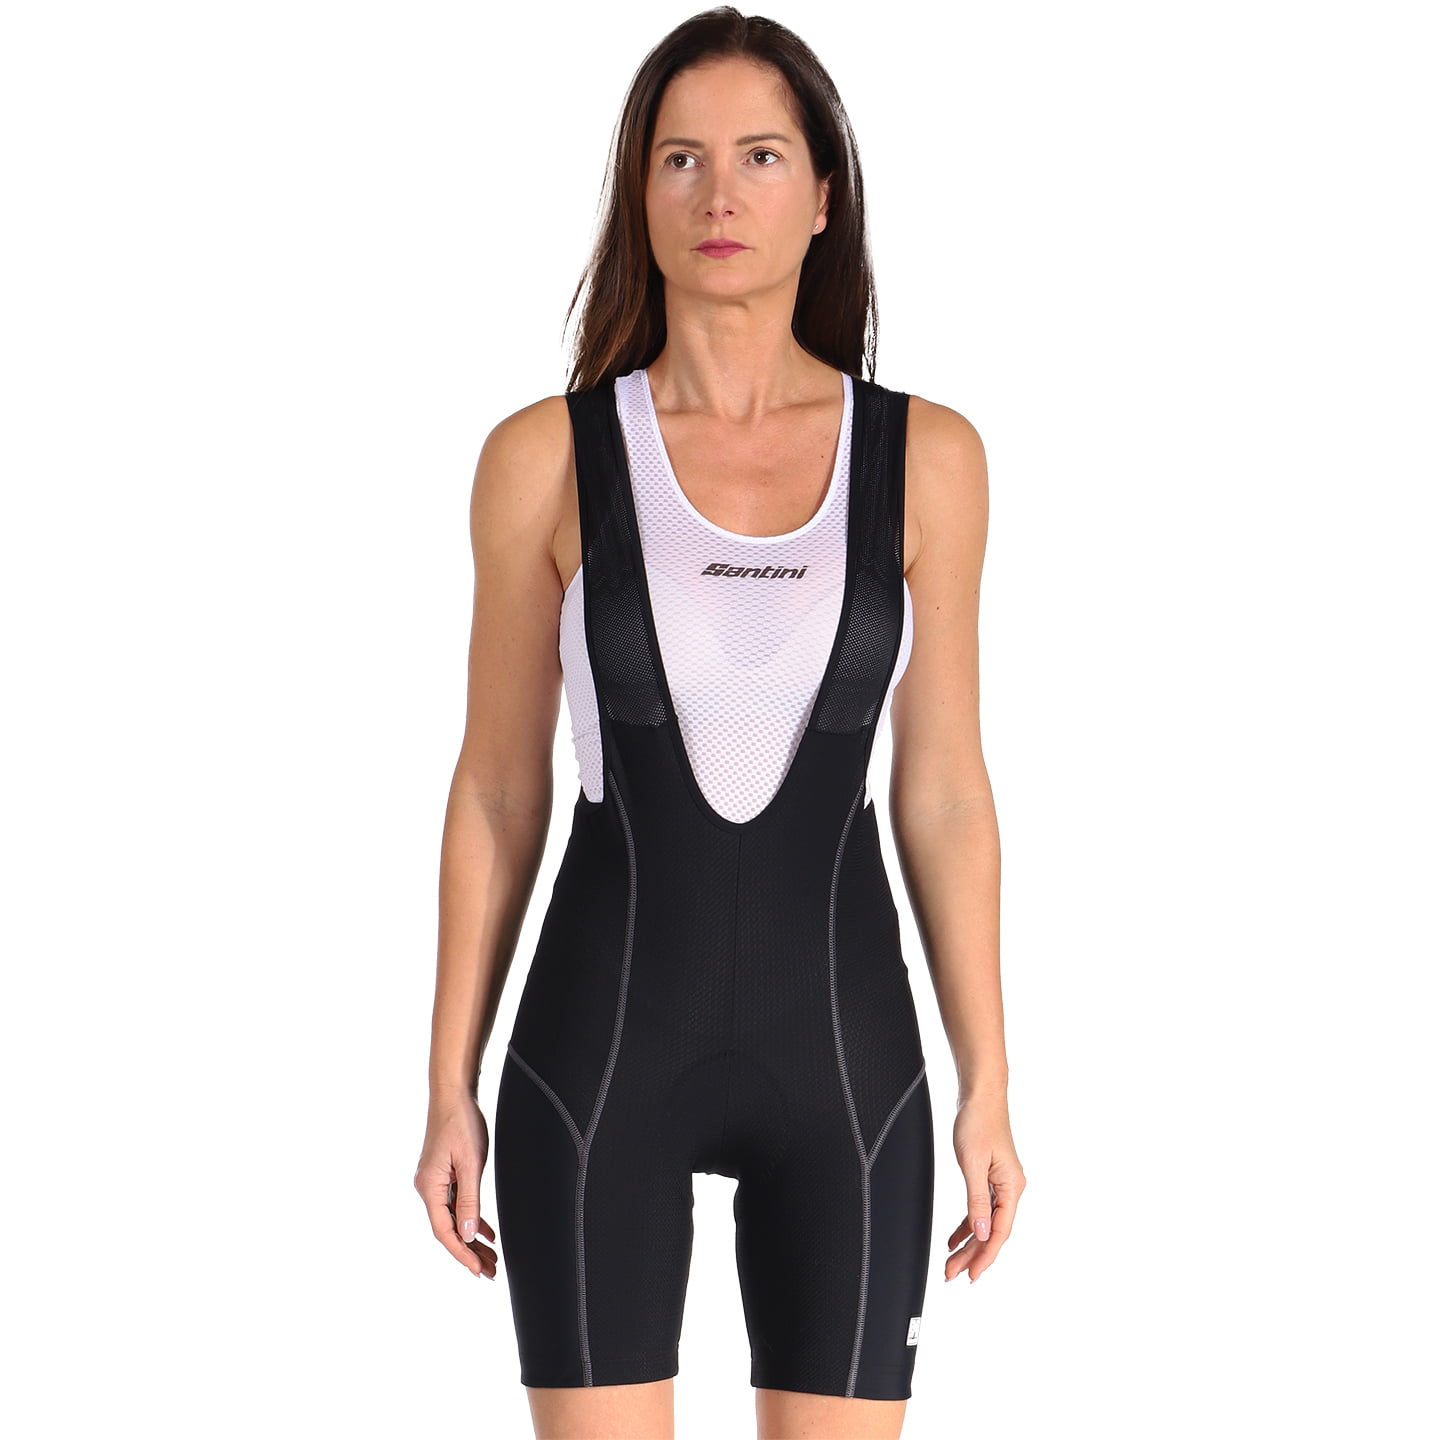 SANTINI Air Pro Gel 2 Women’s Bib Shorts Women’s Bib Shorts, size M, Cycle shorts, Cycling clothing